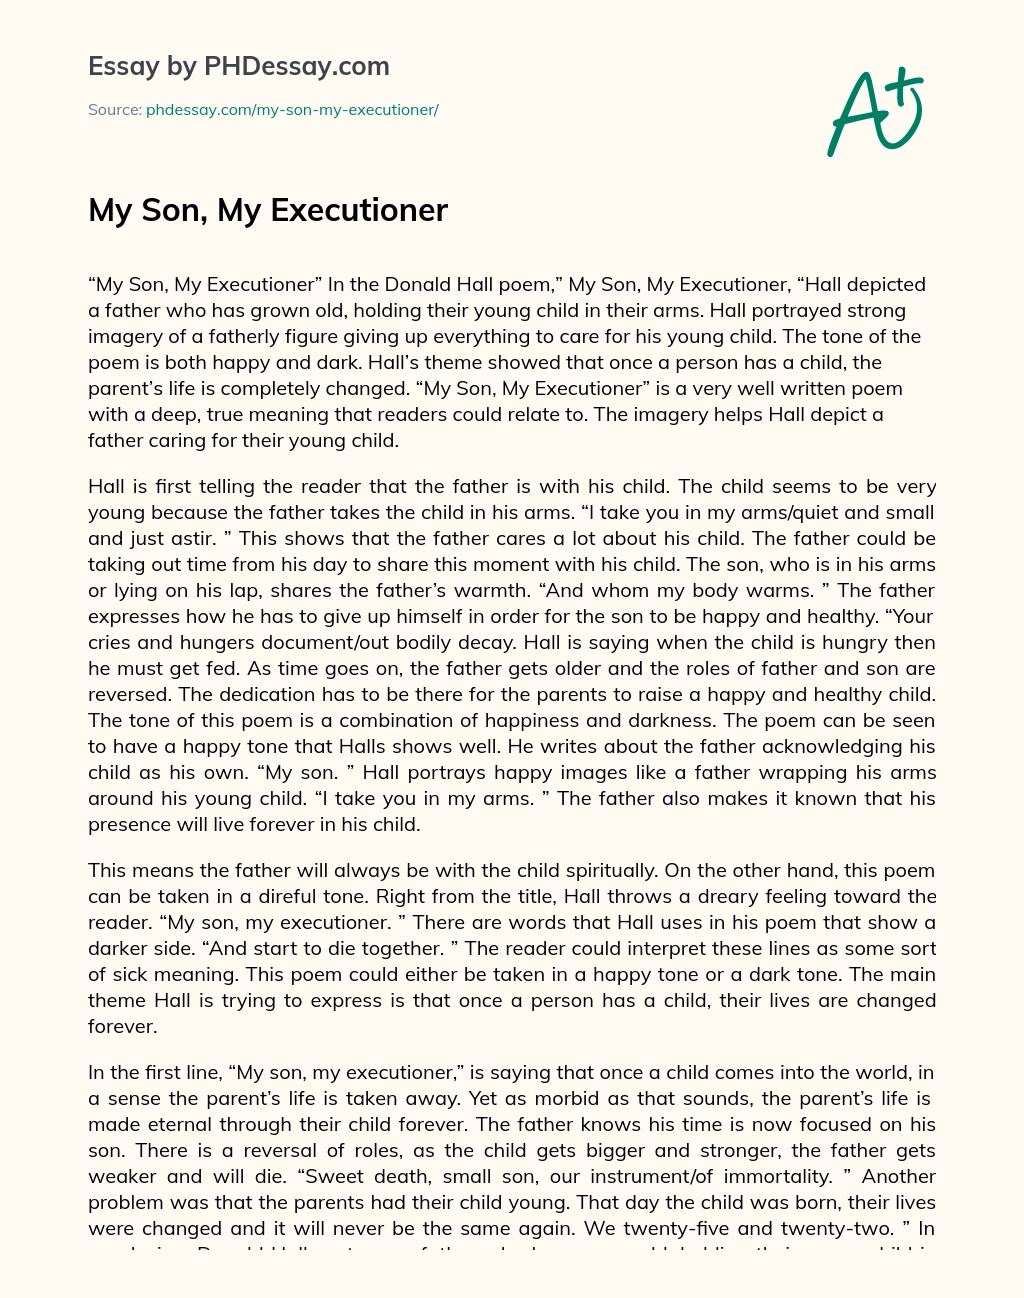 My Son, My Executioner essay